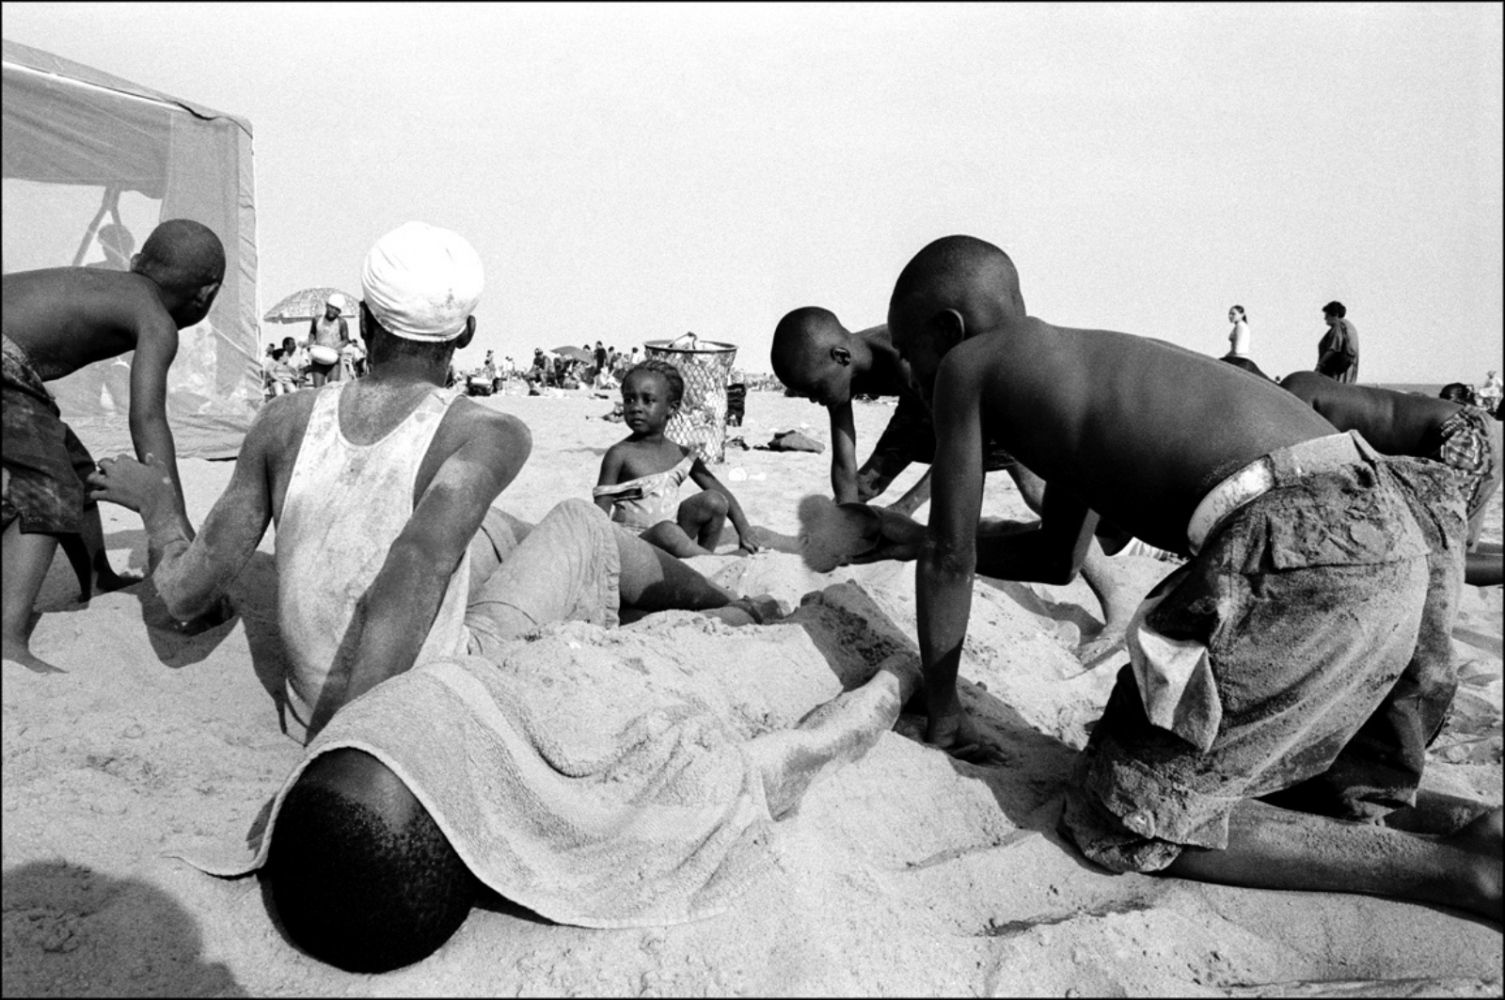 Coney Island 2004 -  Bury Sam in the Sand, Coney Island, NY, July 4, 2004   